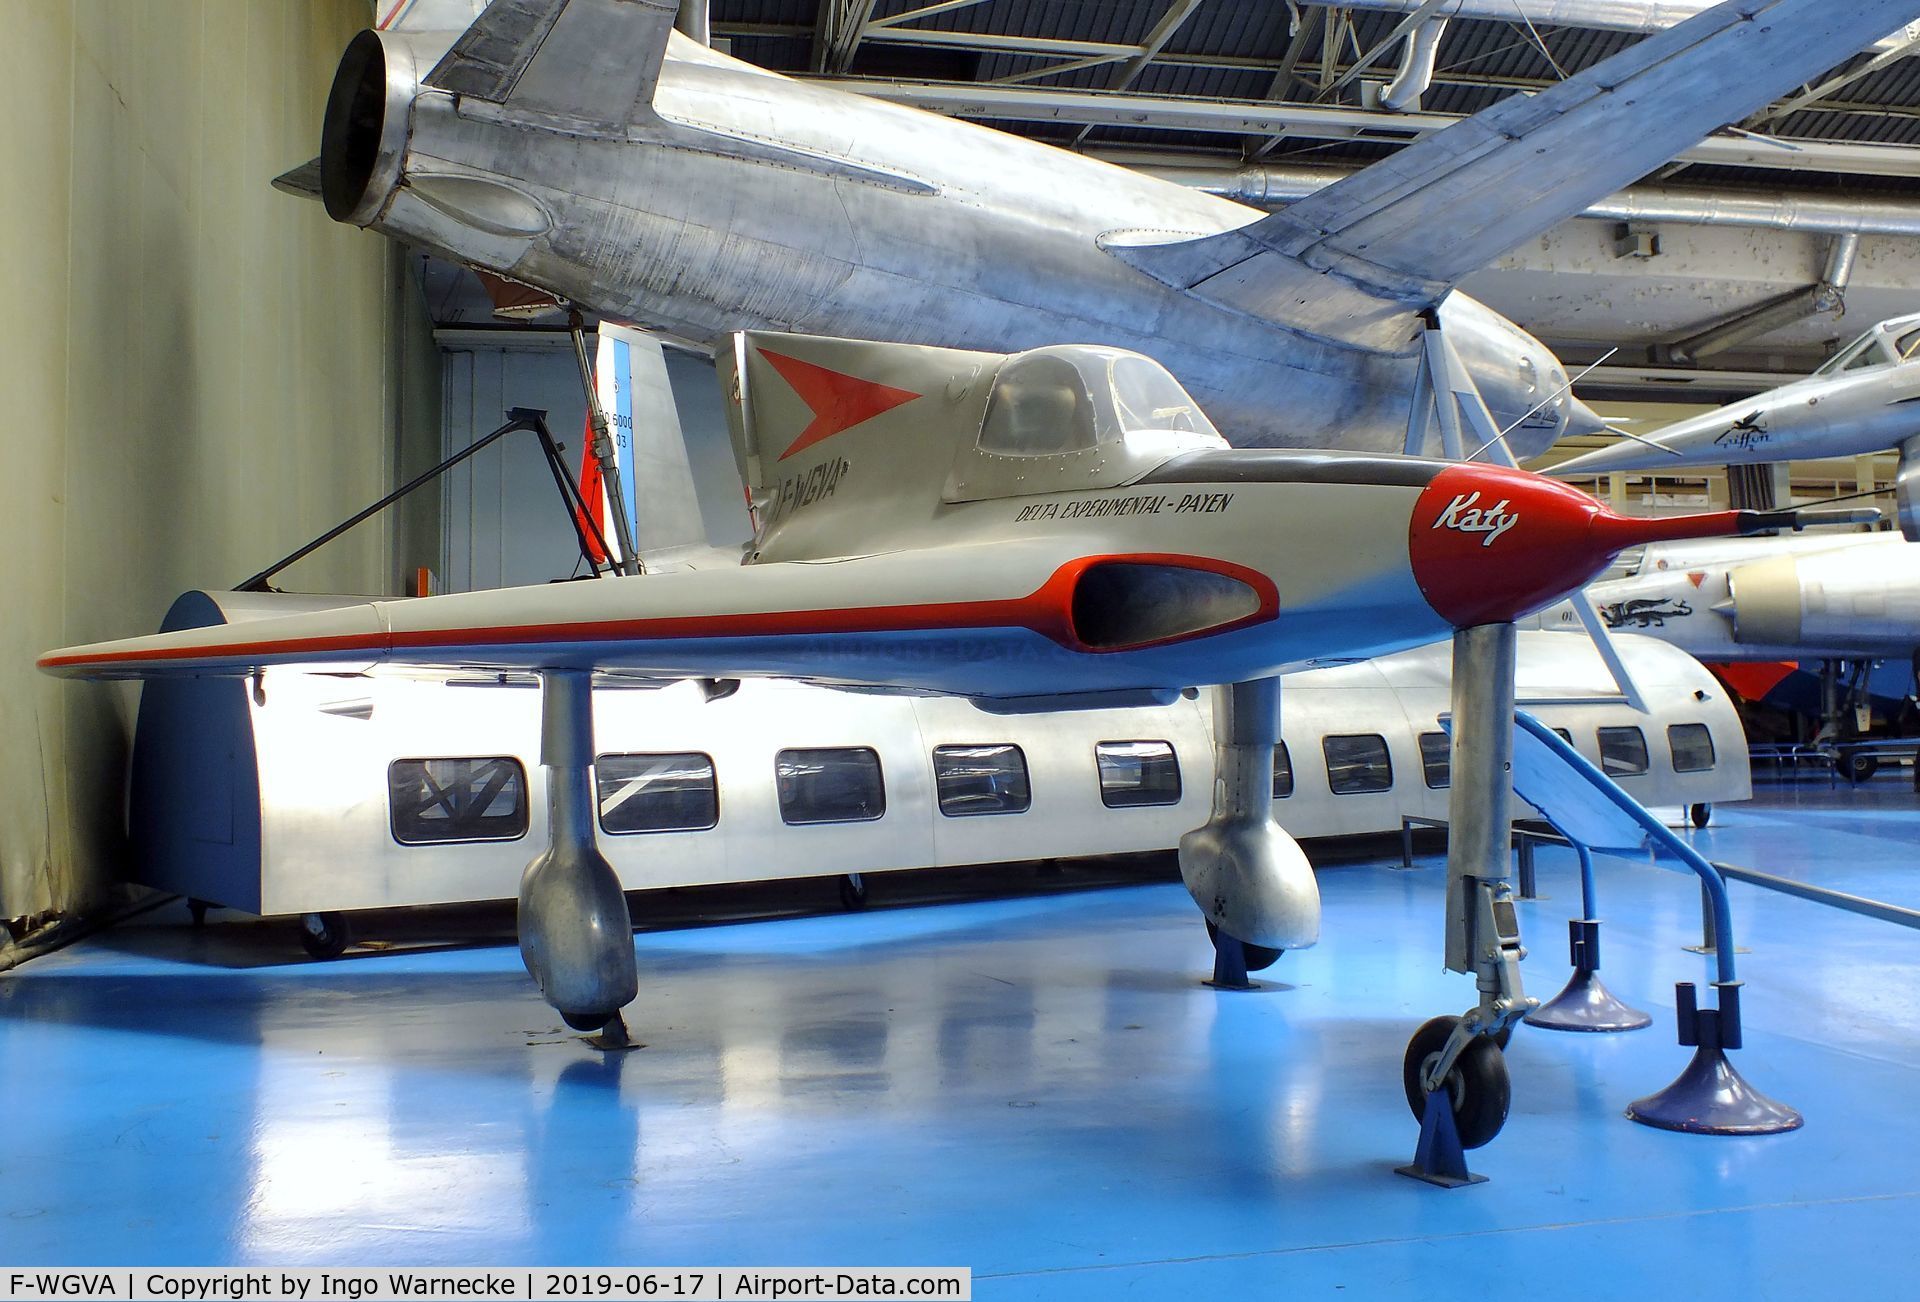 F-WGVA, Payen Pa-49B Katy Delta C/N 01, Payen Pa.49B Katy Delta at the Musee de l'Air, Paris/Le Bourget